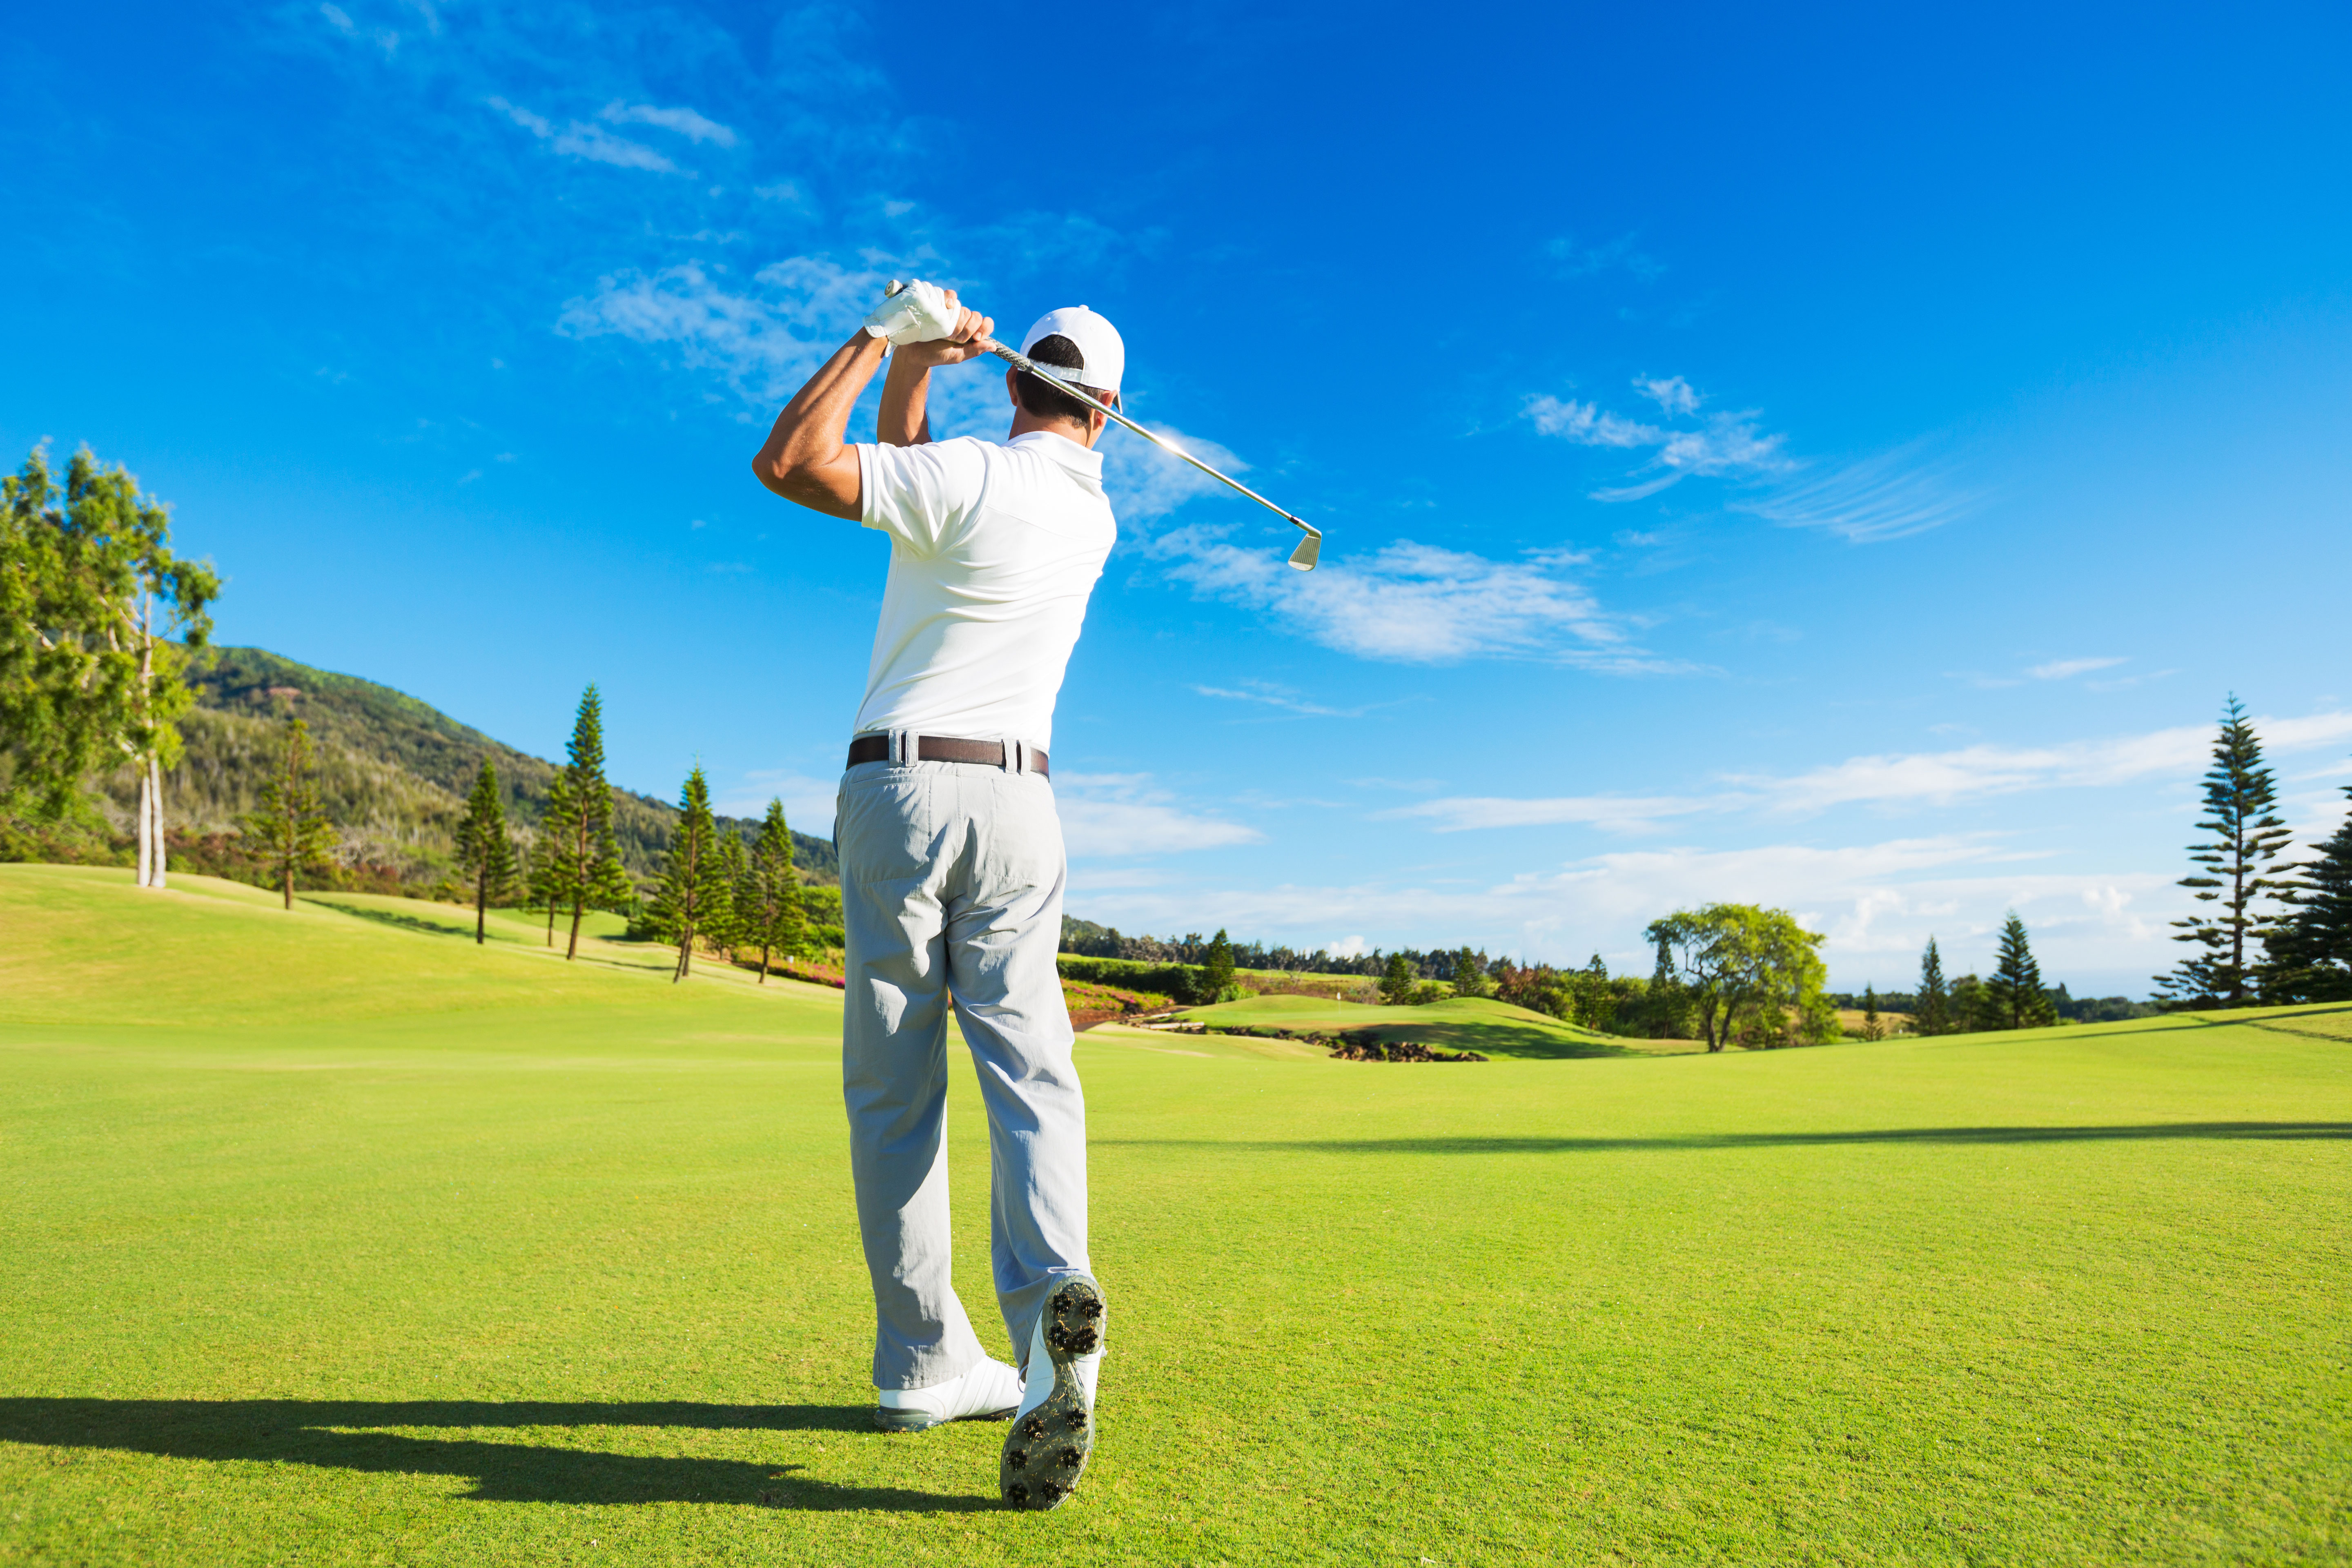 gradual movement golfing swing arms